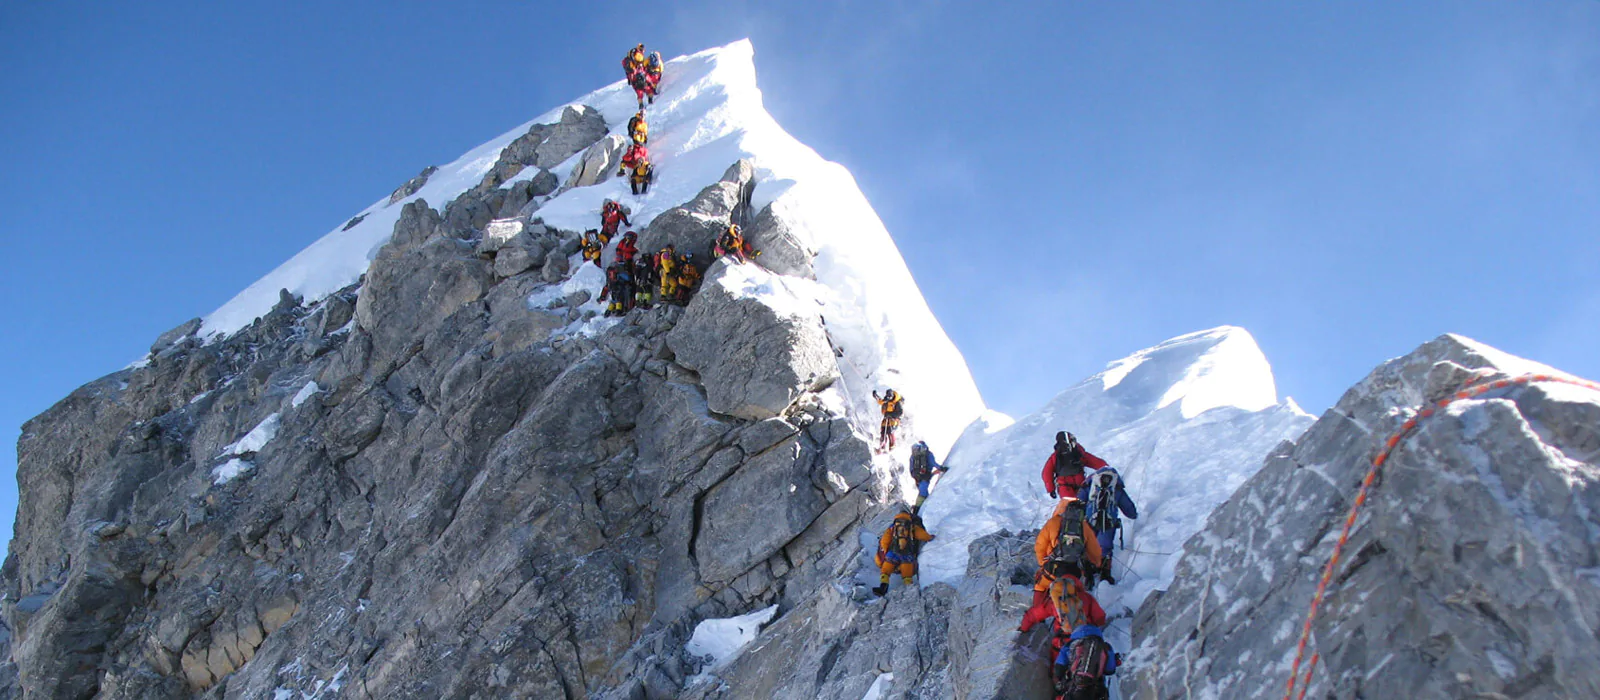 Climbers ascending Mount Everest